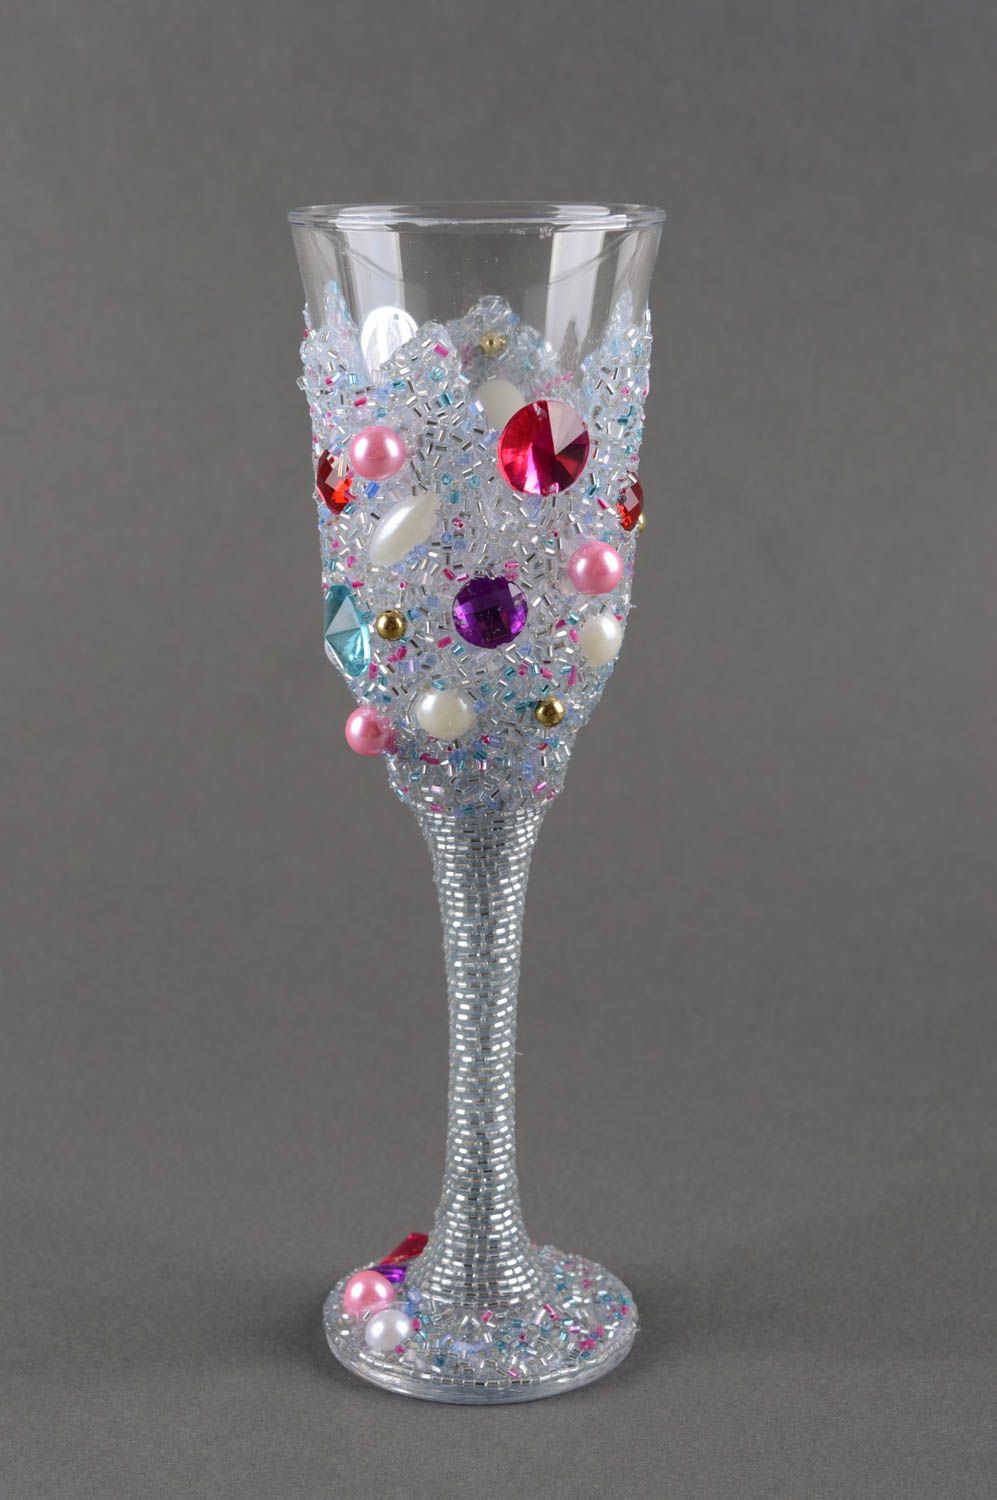 Handmade glasses champagne glasses wedding glasses set of 2 items gift ideas photo 4